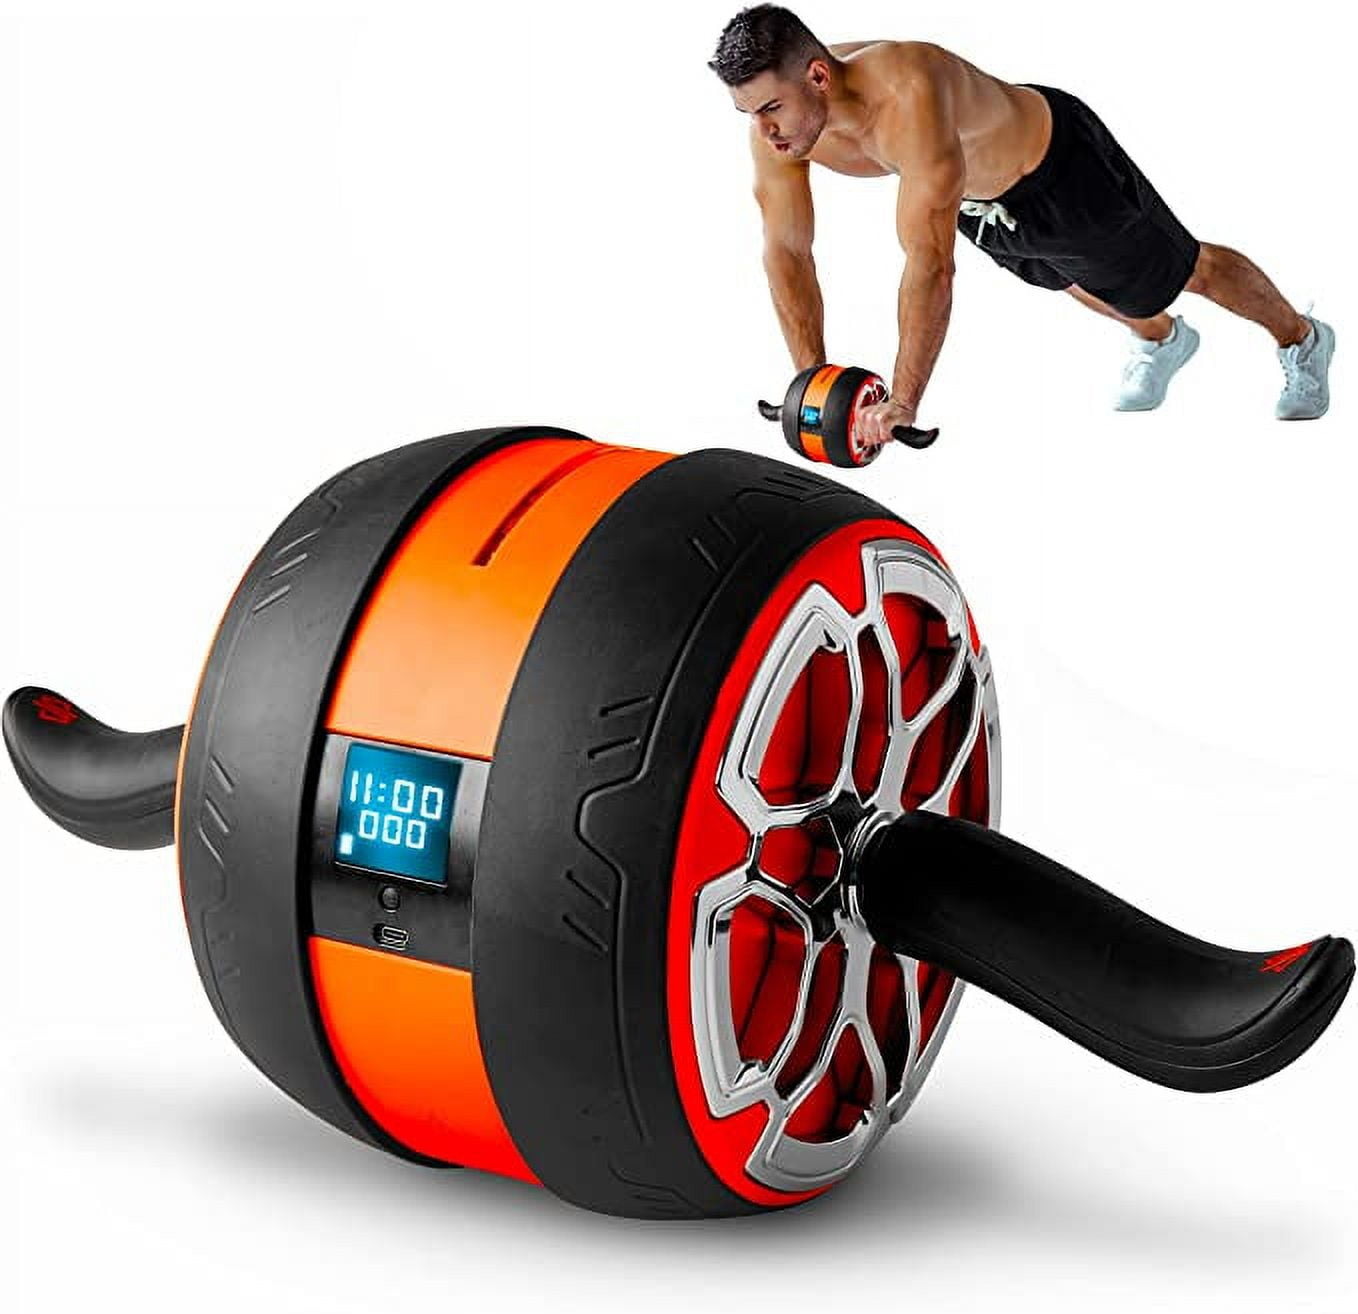 Squatz Digital Ab Roller Wheel - Ultra Wide Ab Wheel with Pilates